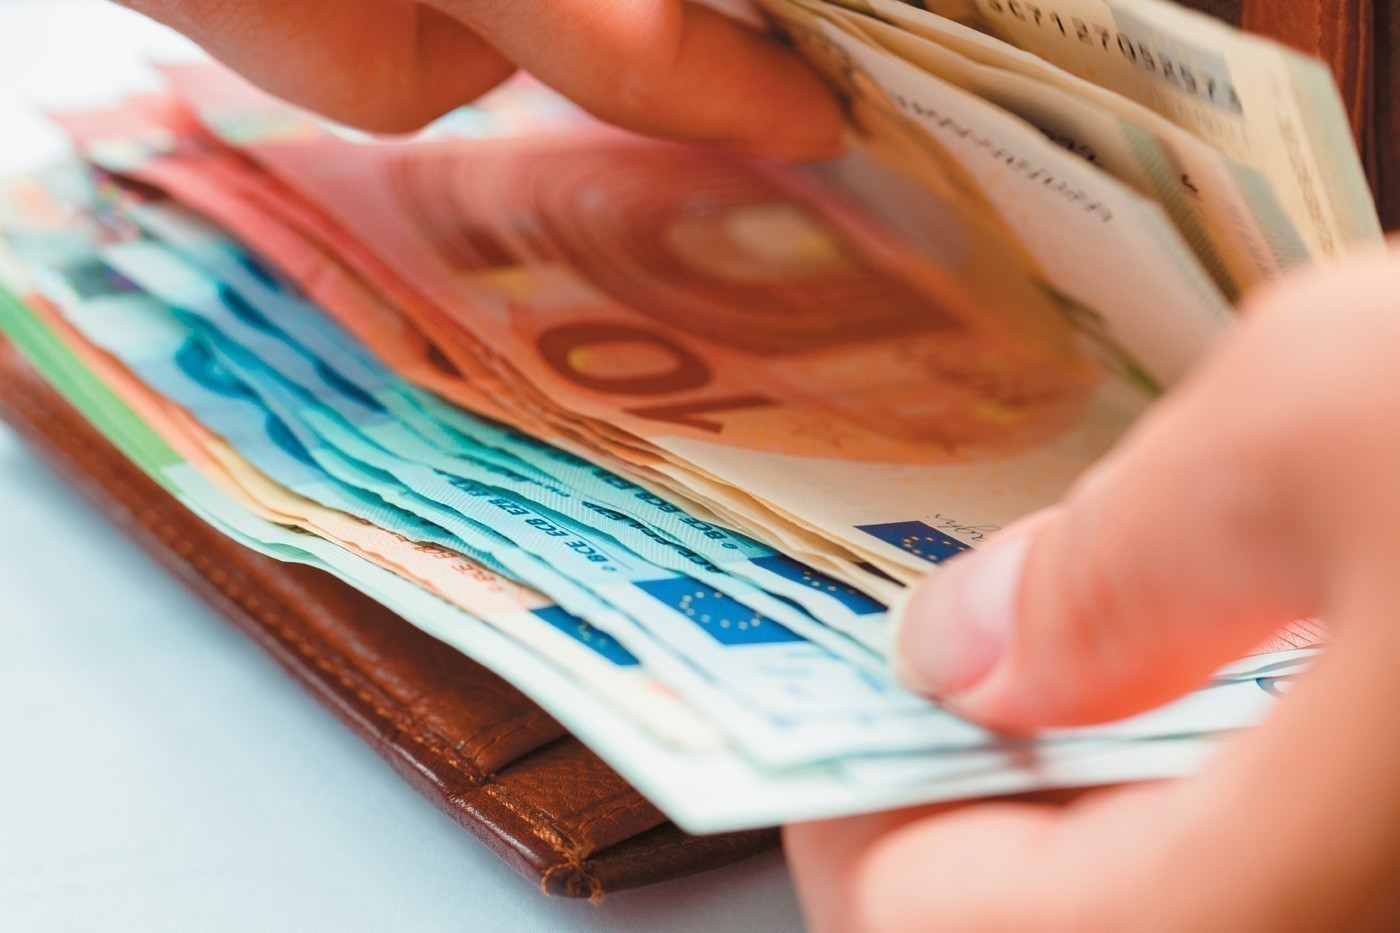 Eπίδομα 534 ευρώ: Πότε θα λάβουν χρήματα οι δικαιούχοι